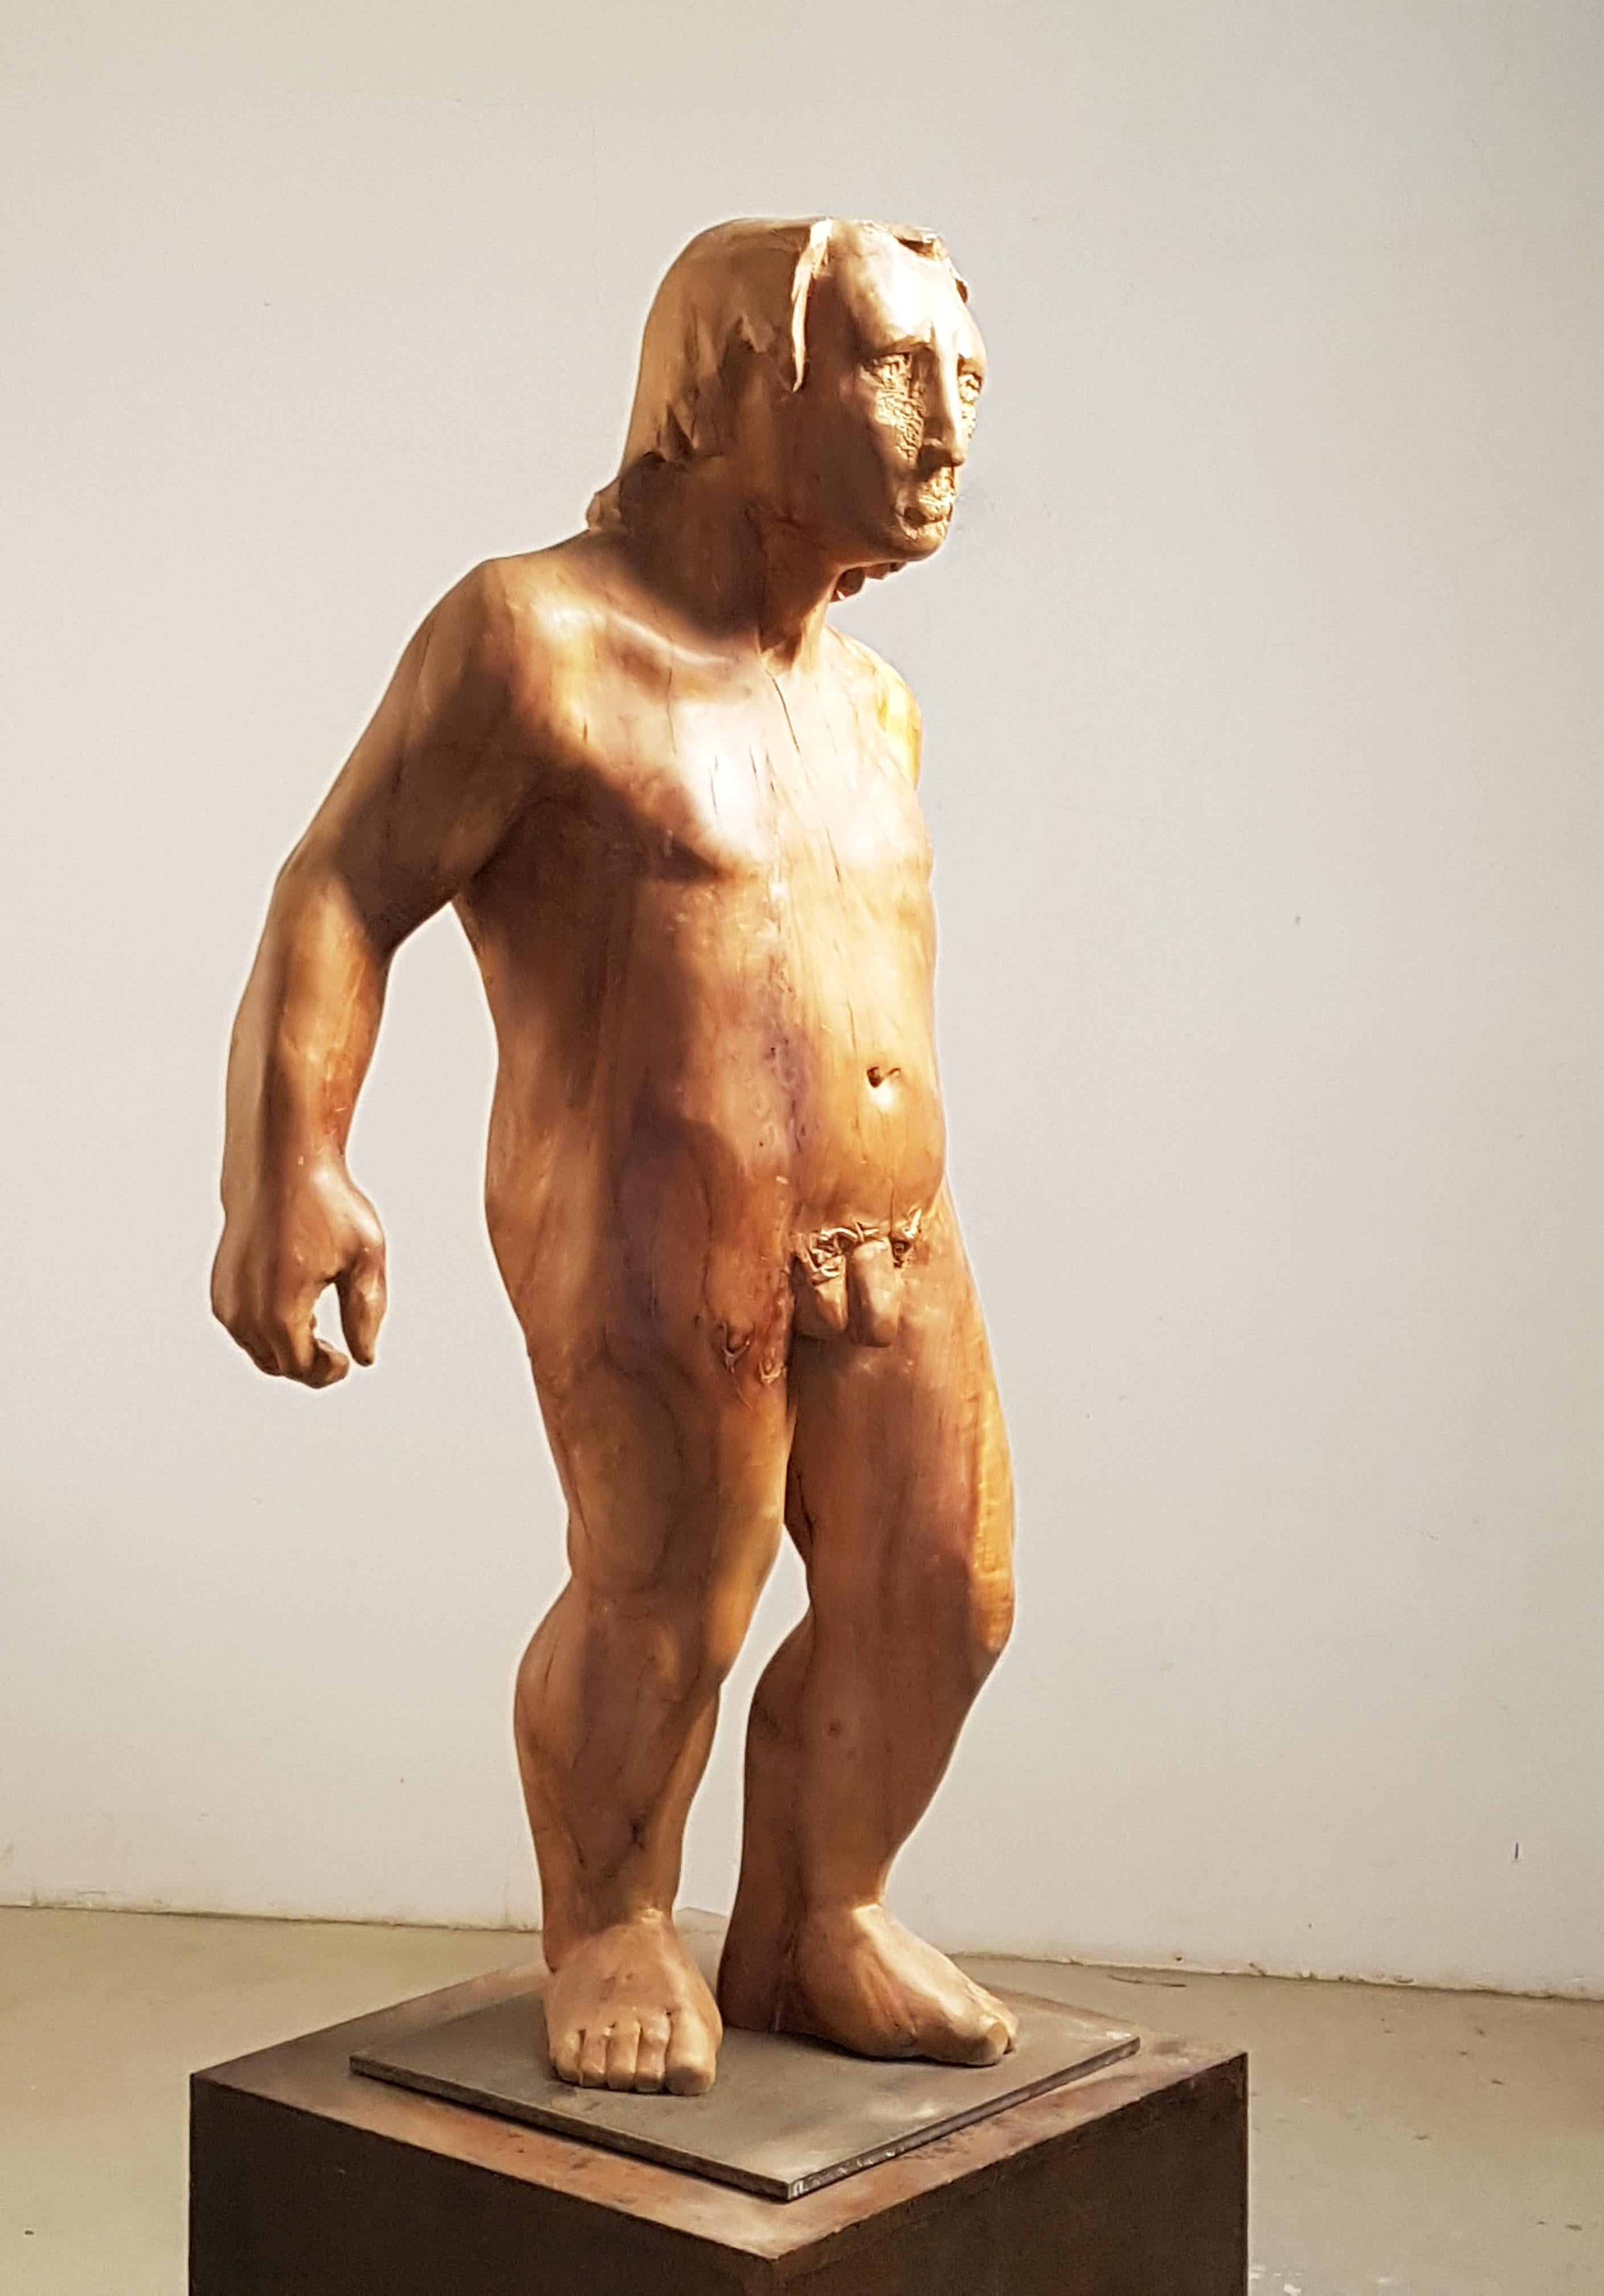 Amancio   Man  Perseo  wood  original  sculpture - Contemporary Sculpture by Amancio González Andrés